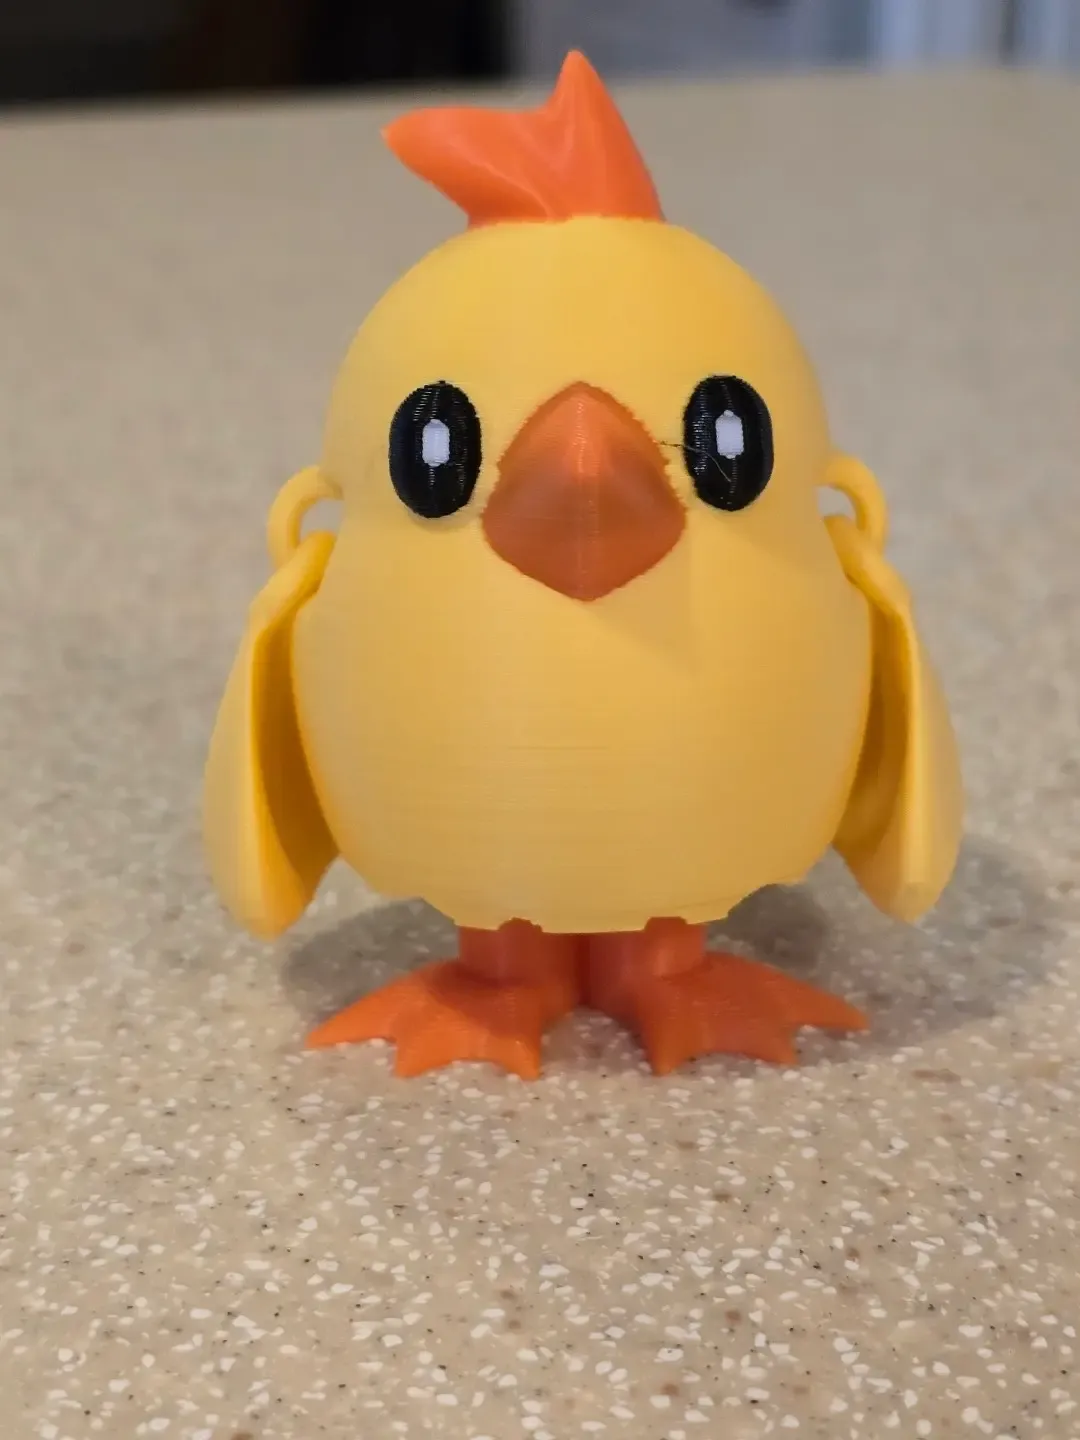 Cute Articulated Chick